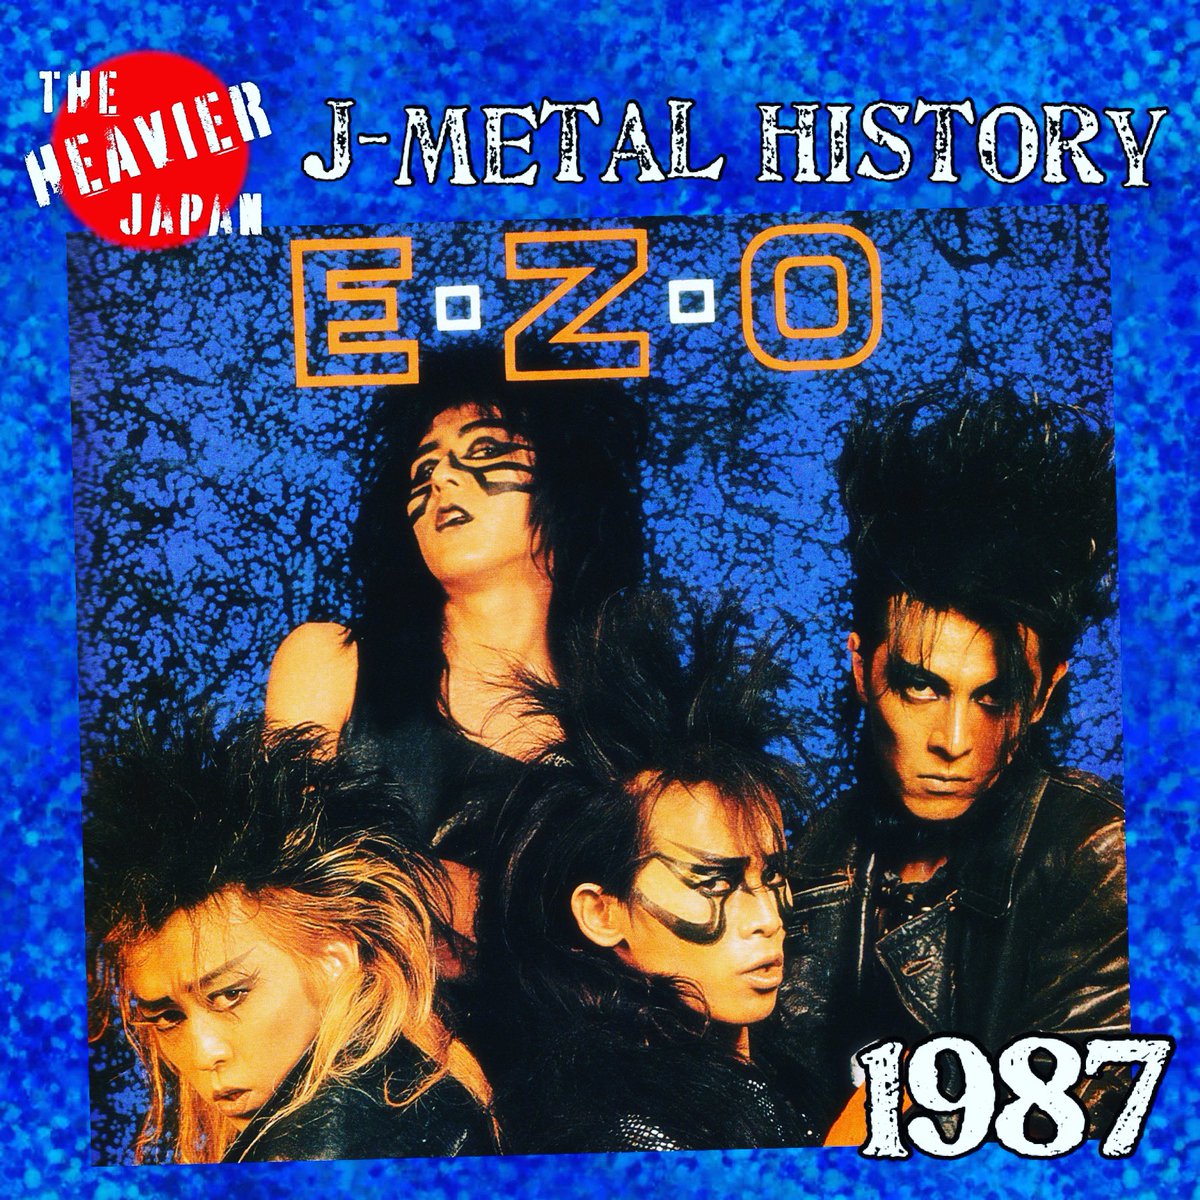 #jmetalhistory
J-metal legend EZO group shot in 1987!!

#japanesemetal 
#jrock #jmetal 
#heavymetal
#ezo #ezoband
#80smetal #oldschoolmetal
#retropics

#music #love #metal #art #musician #artist